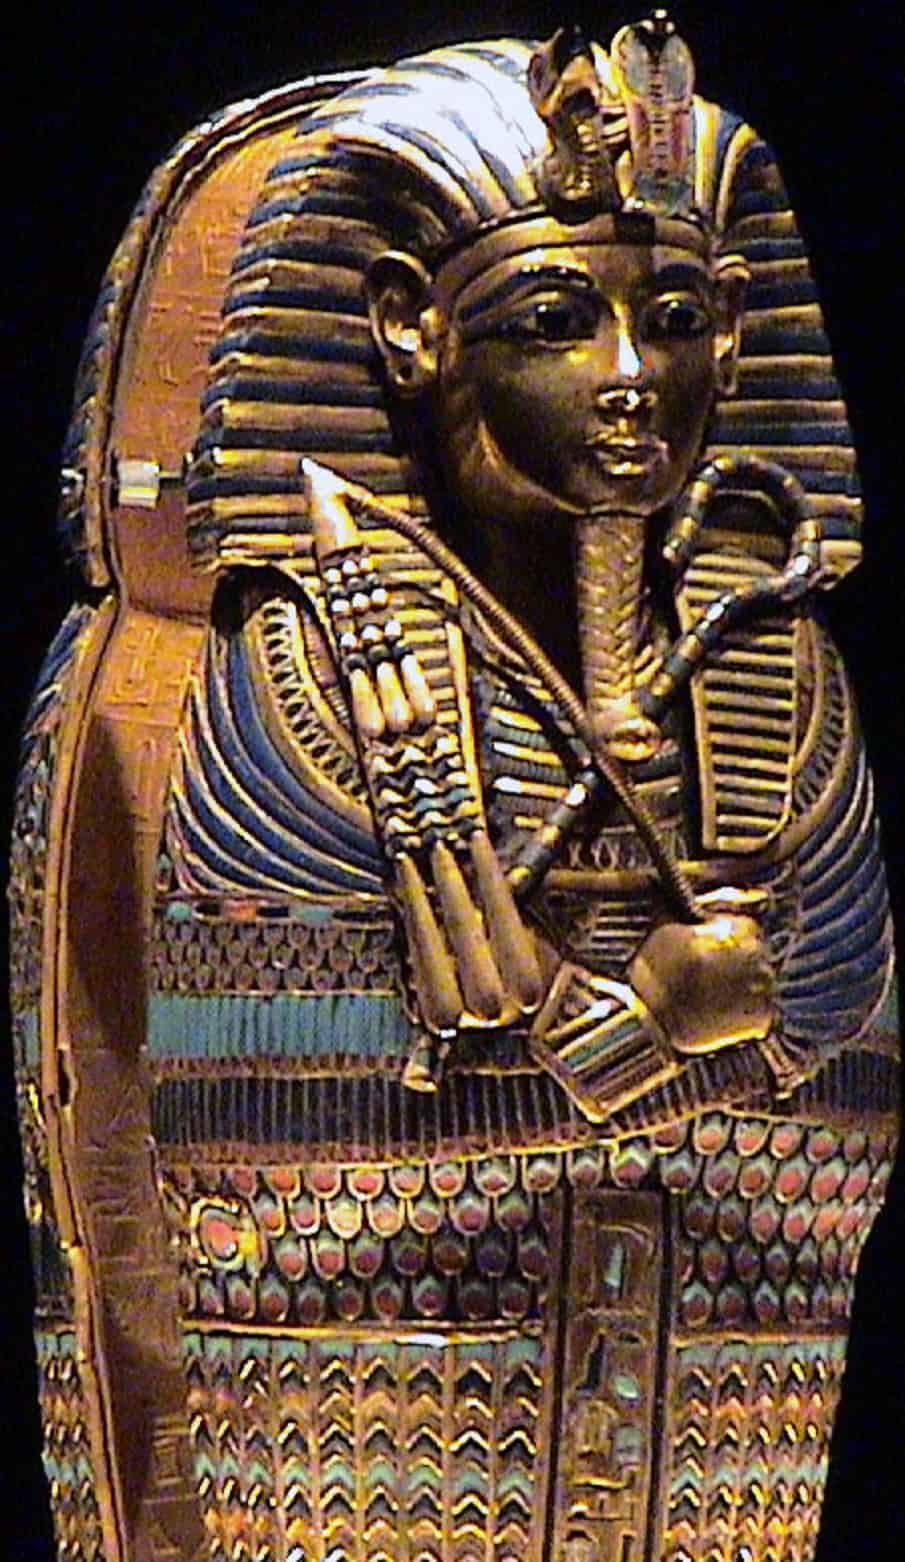 Tutcoffinette - 10 Ancient Egyptian Symbols You Should Know About